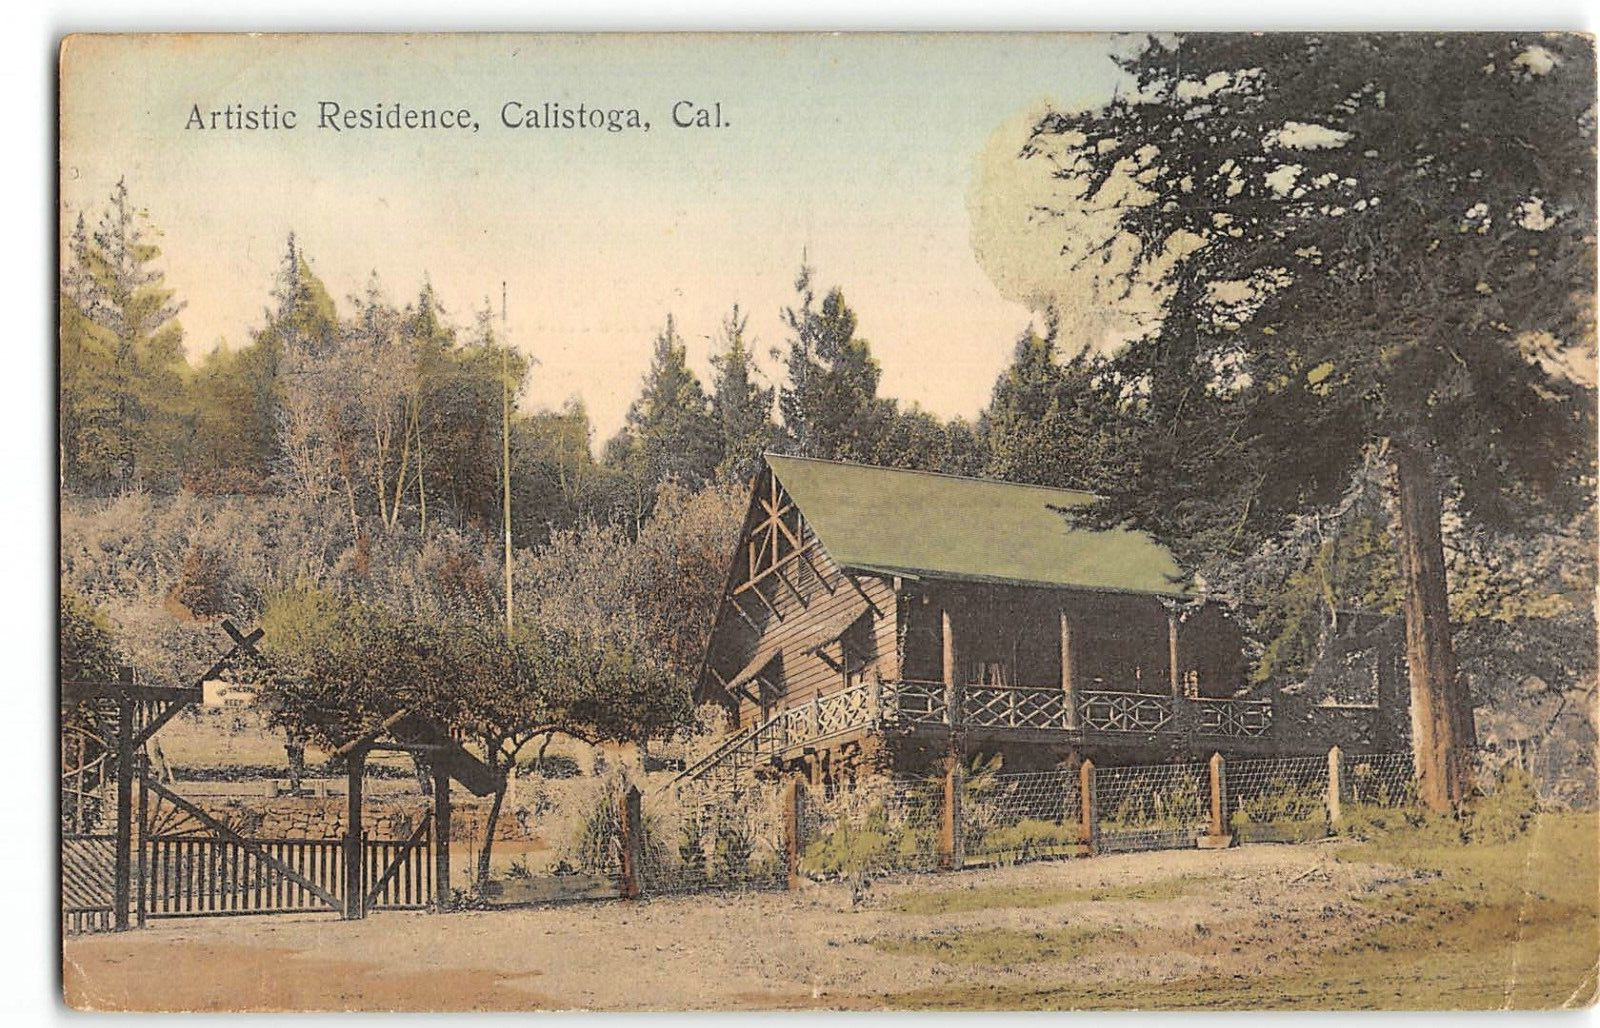 Artistic Residence CALISTOGA, CA Napa County 1908 Hand-Colored Vintage Postcard